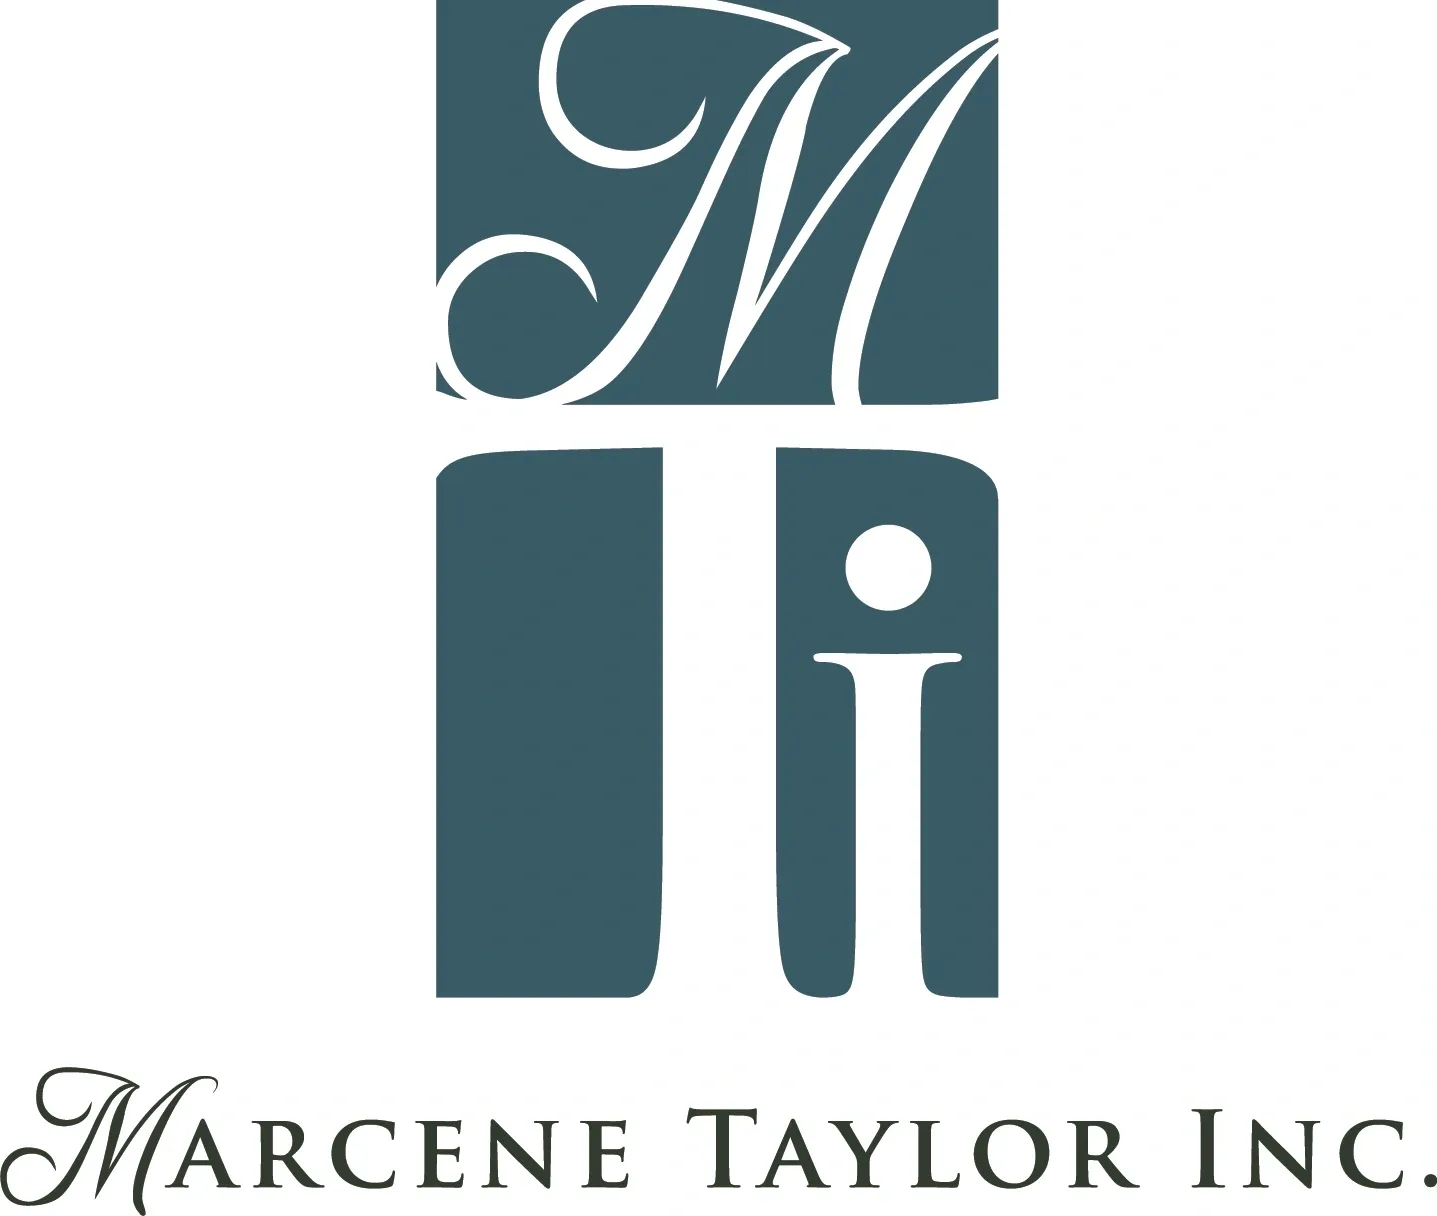 Marcene Taylor Inc Logo_Final-7a3d07a